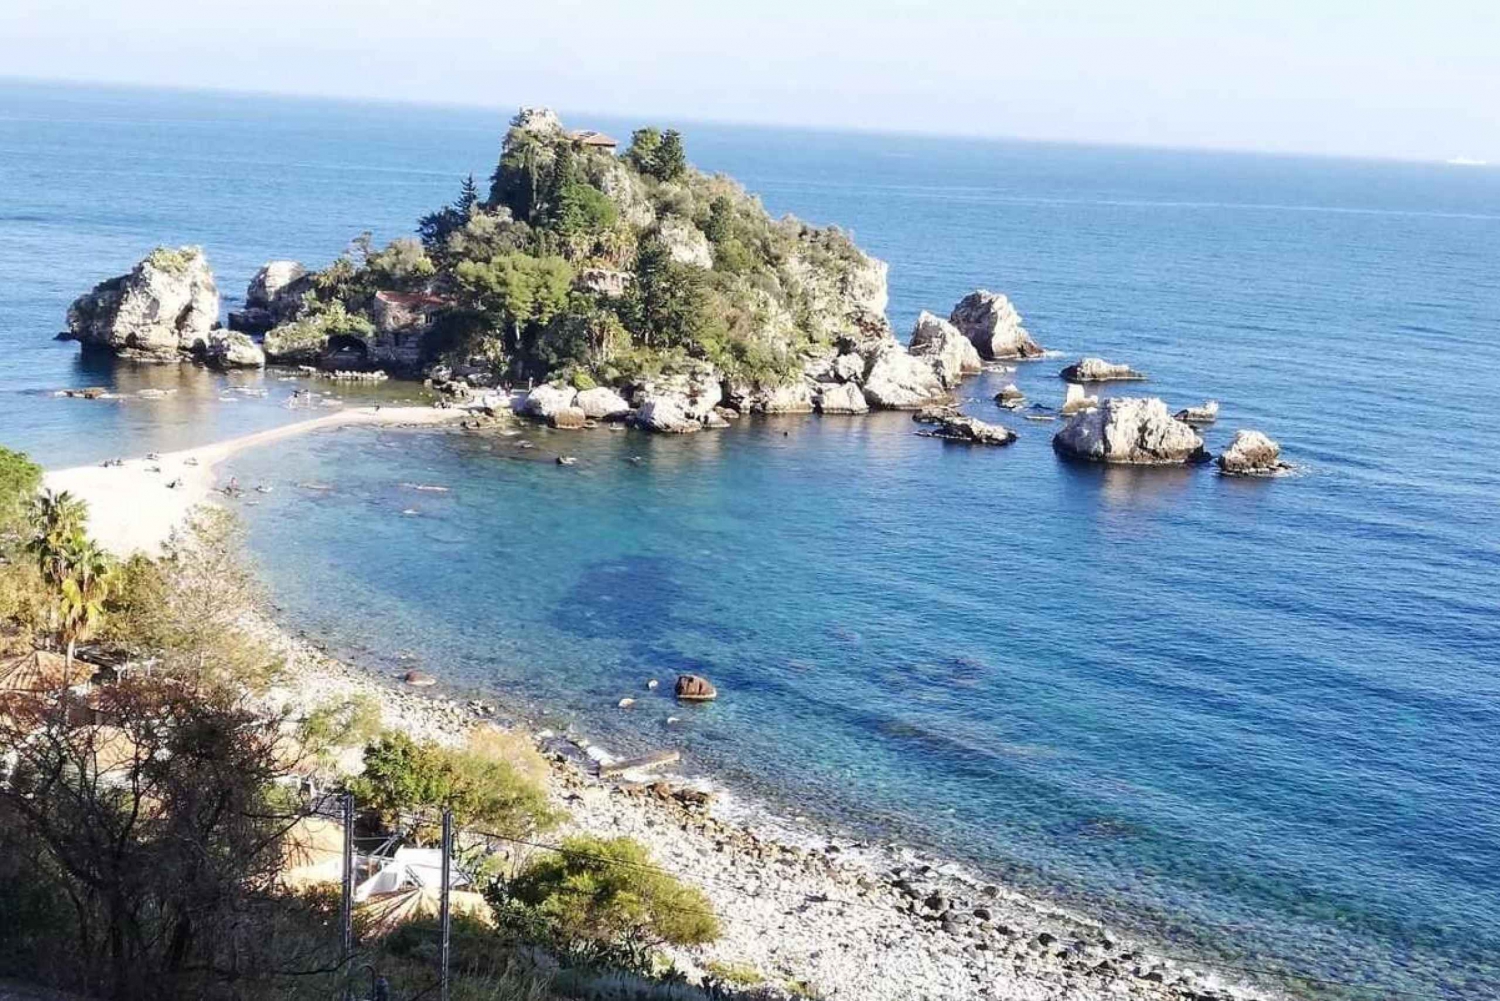 From Catania: Day Trip to Giardini Naxos and Taormina